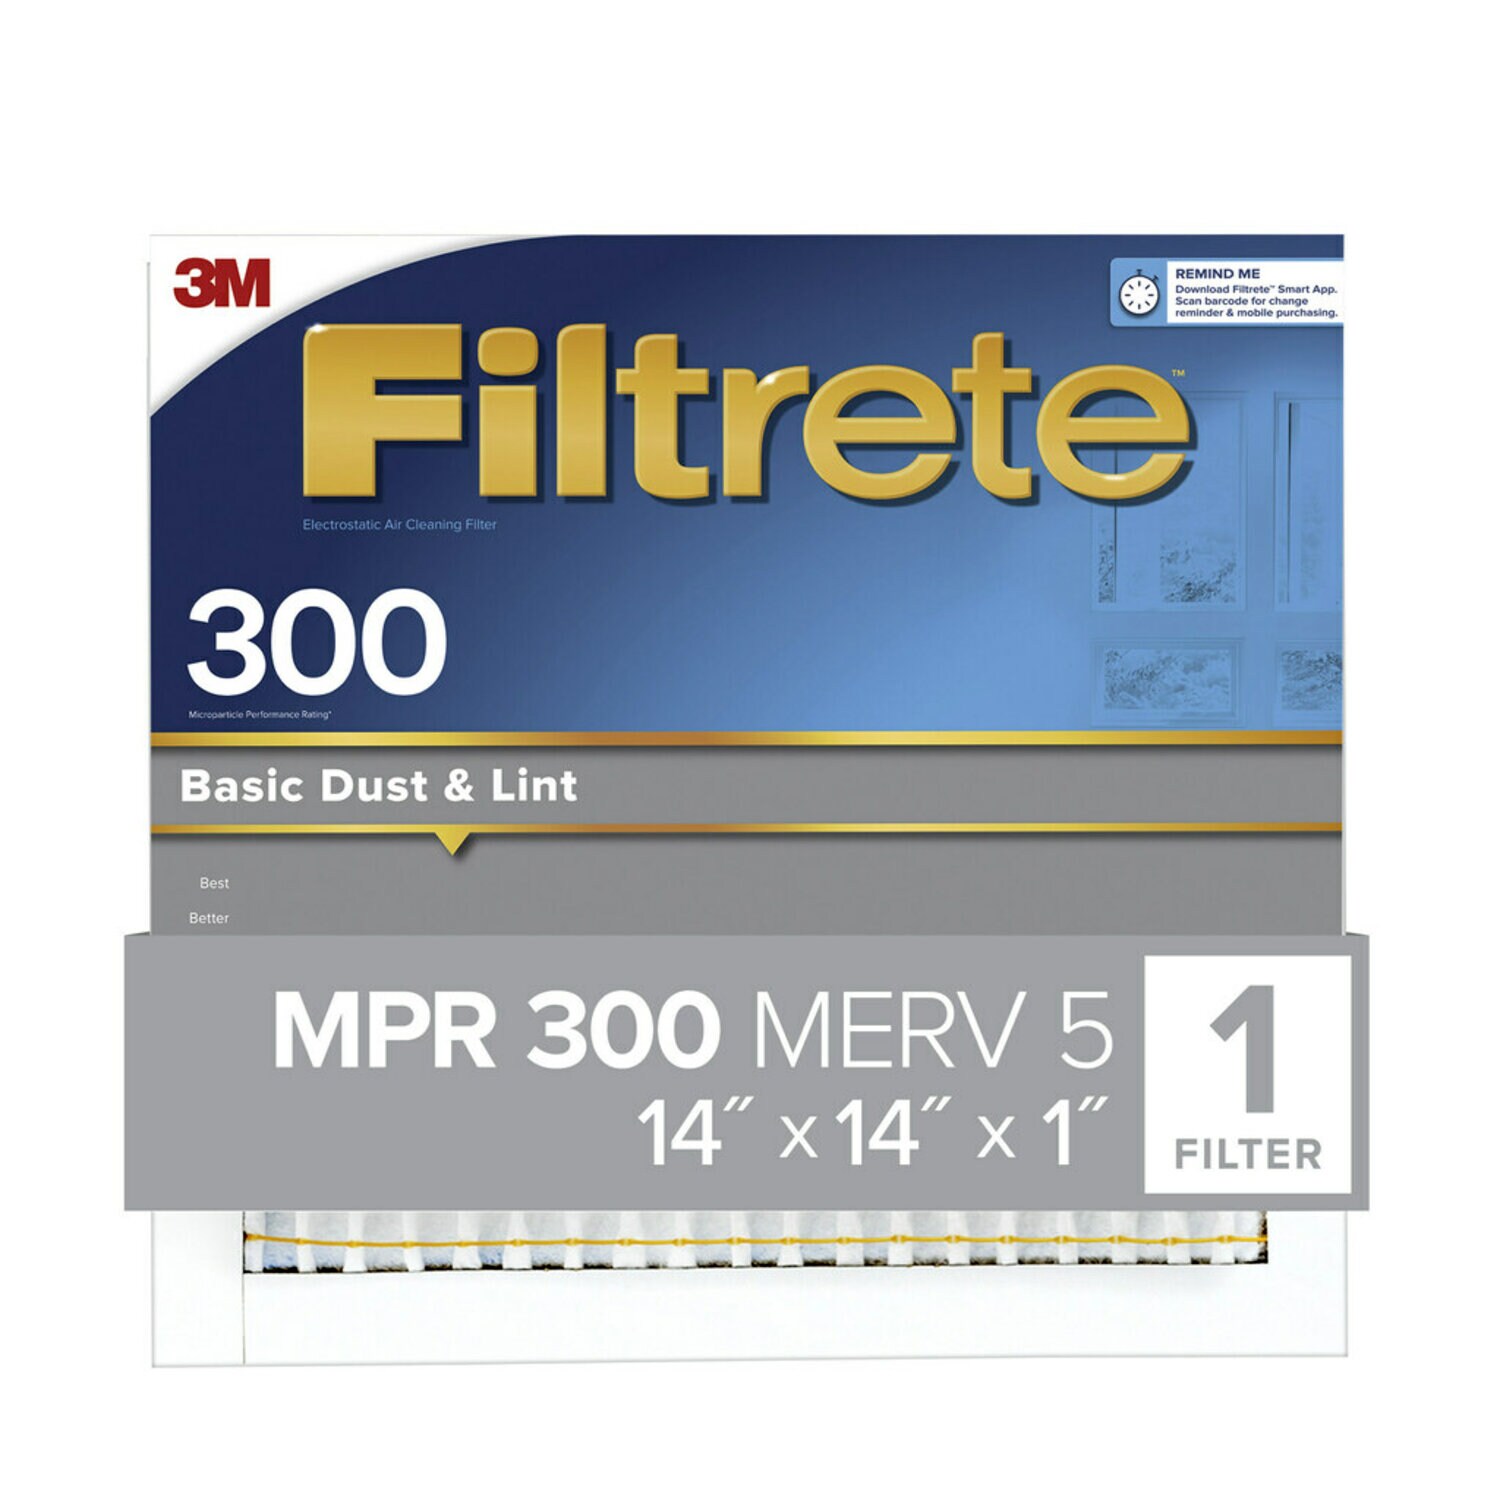 7100187896 - Filtrete Basic Dust & Lint Air Filter, 300 MPR, 311-4, 14 in x 14 in x
1 in (35.5 cm x 35.5 cm x 2.5 cm)